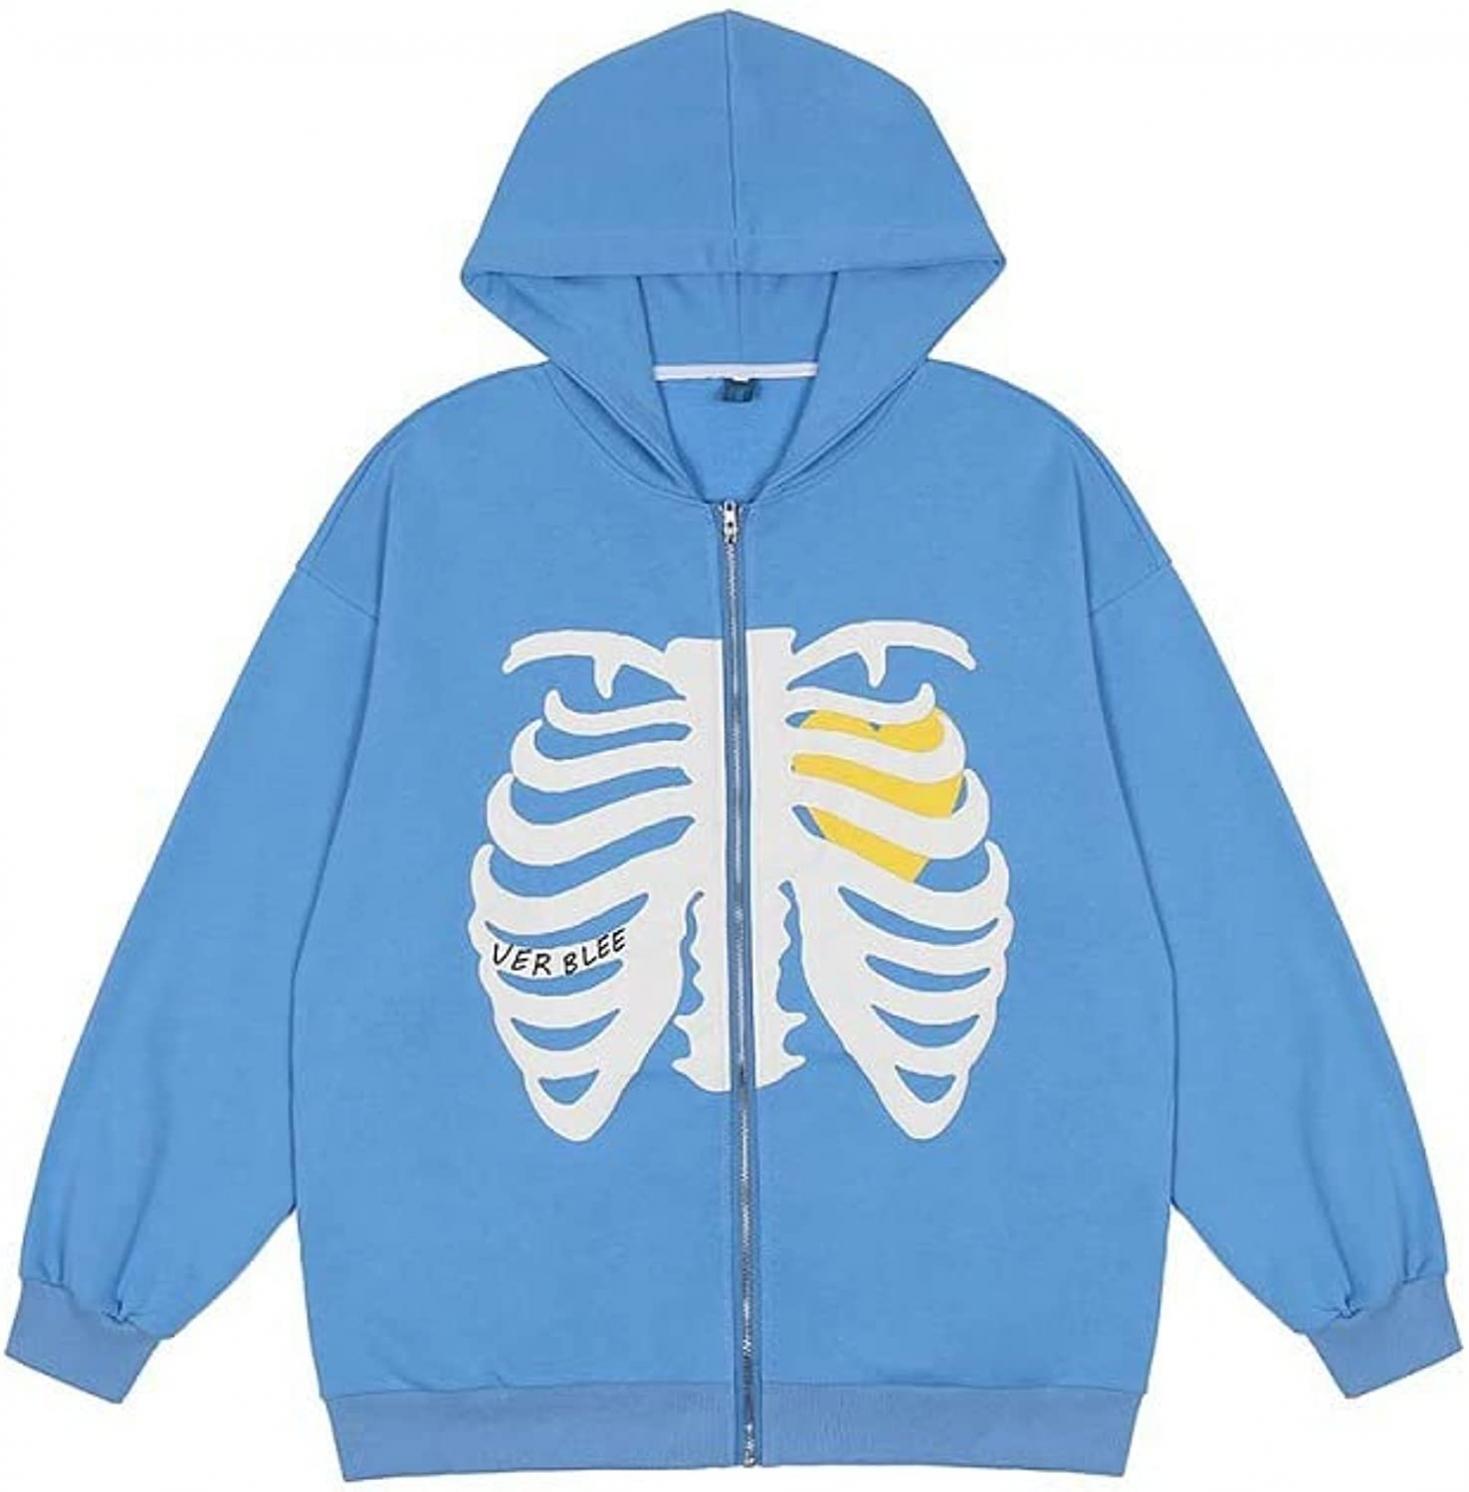 CNLFC Unisex Skeleton Zip Up Hoodie Fashion Vintage Jacket Graphics E-Girl 90s Sweatshirt for Men and Women